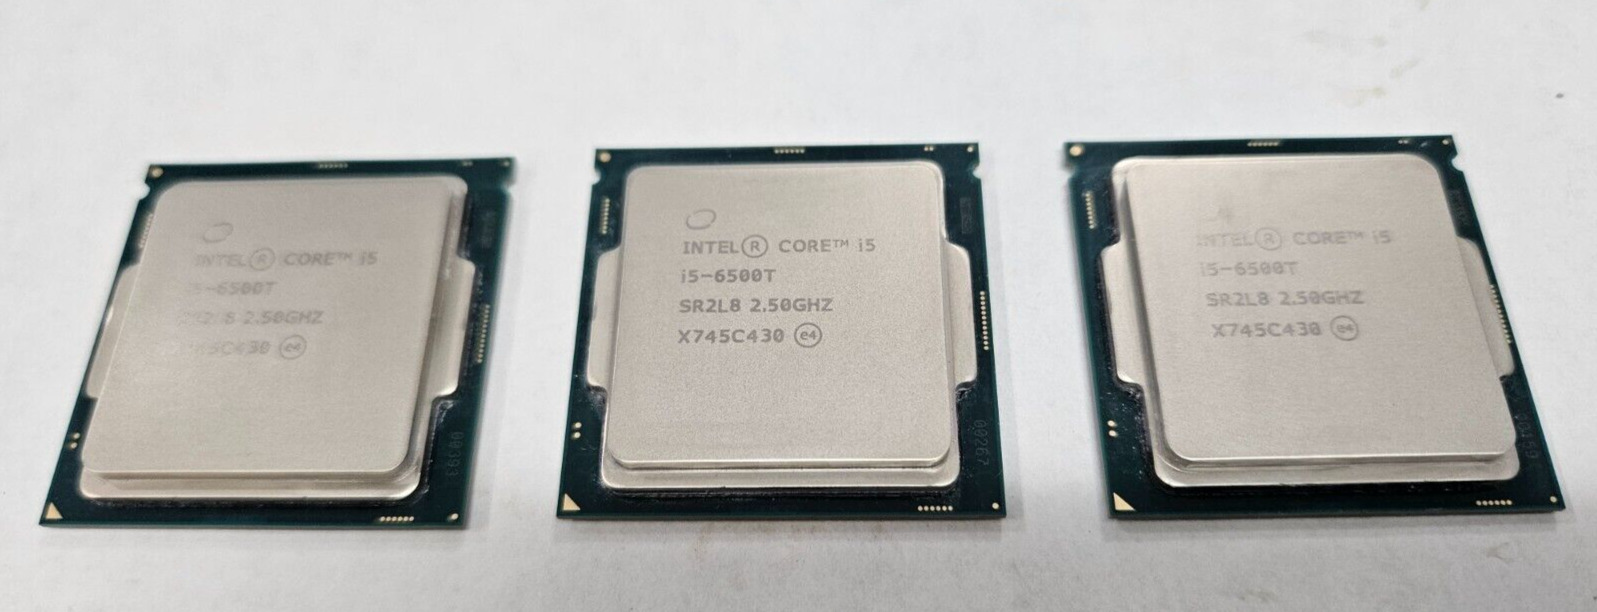 (LOT of 3) Intel Core i5-6500T 2.50GHz SR2L8 6MB L3 Cache Socket CPU Processor